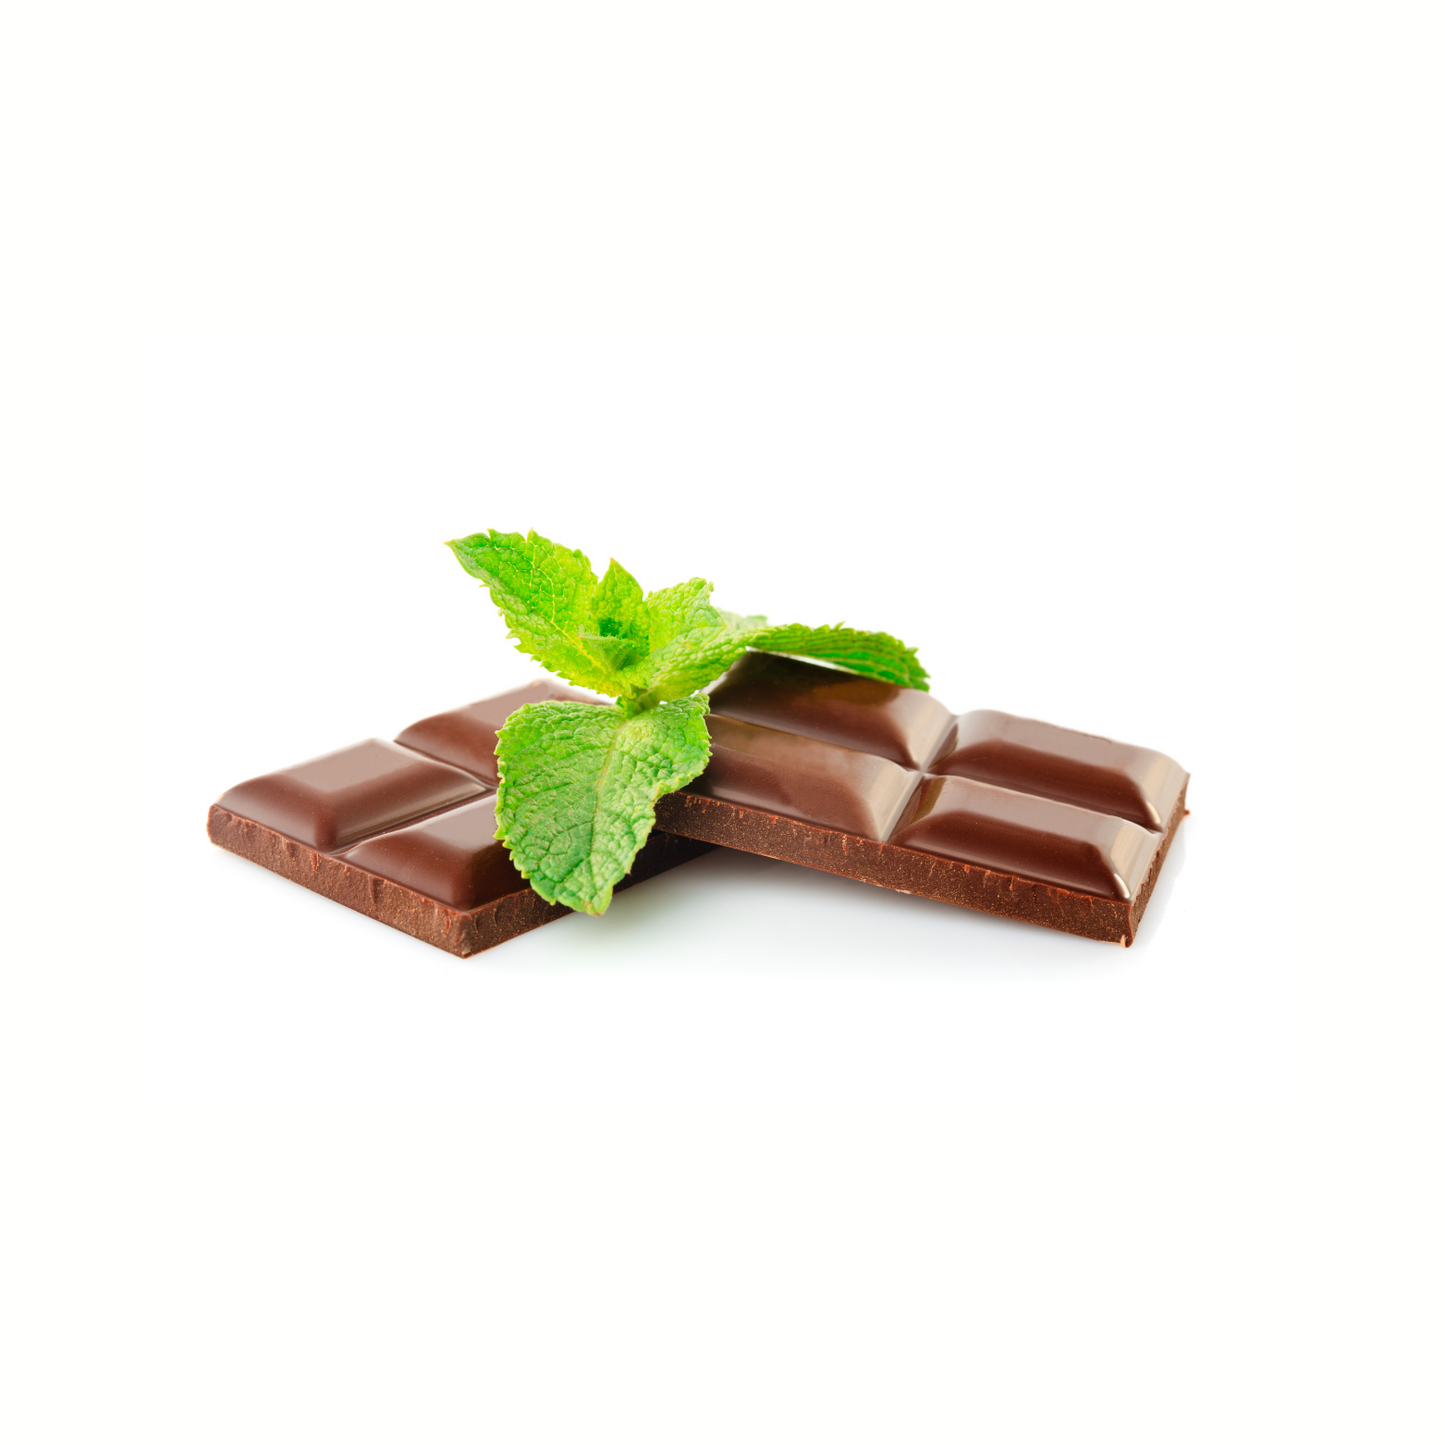 Mint Chocolate Mocha Loose Leaf Yerba Mate Herbal Dessert Tea, Caffeine Free, Energy Drink